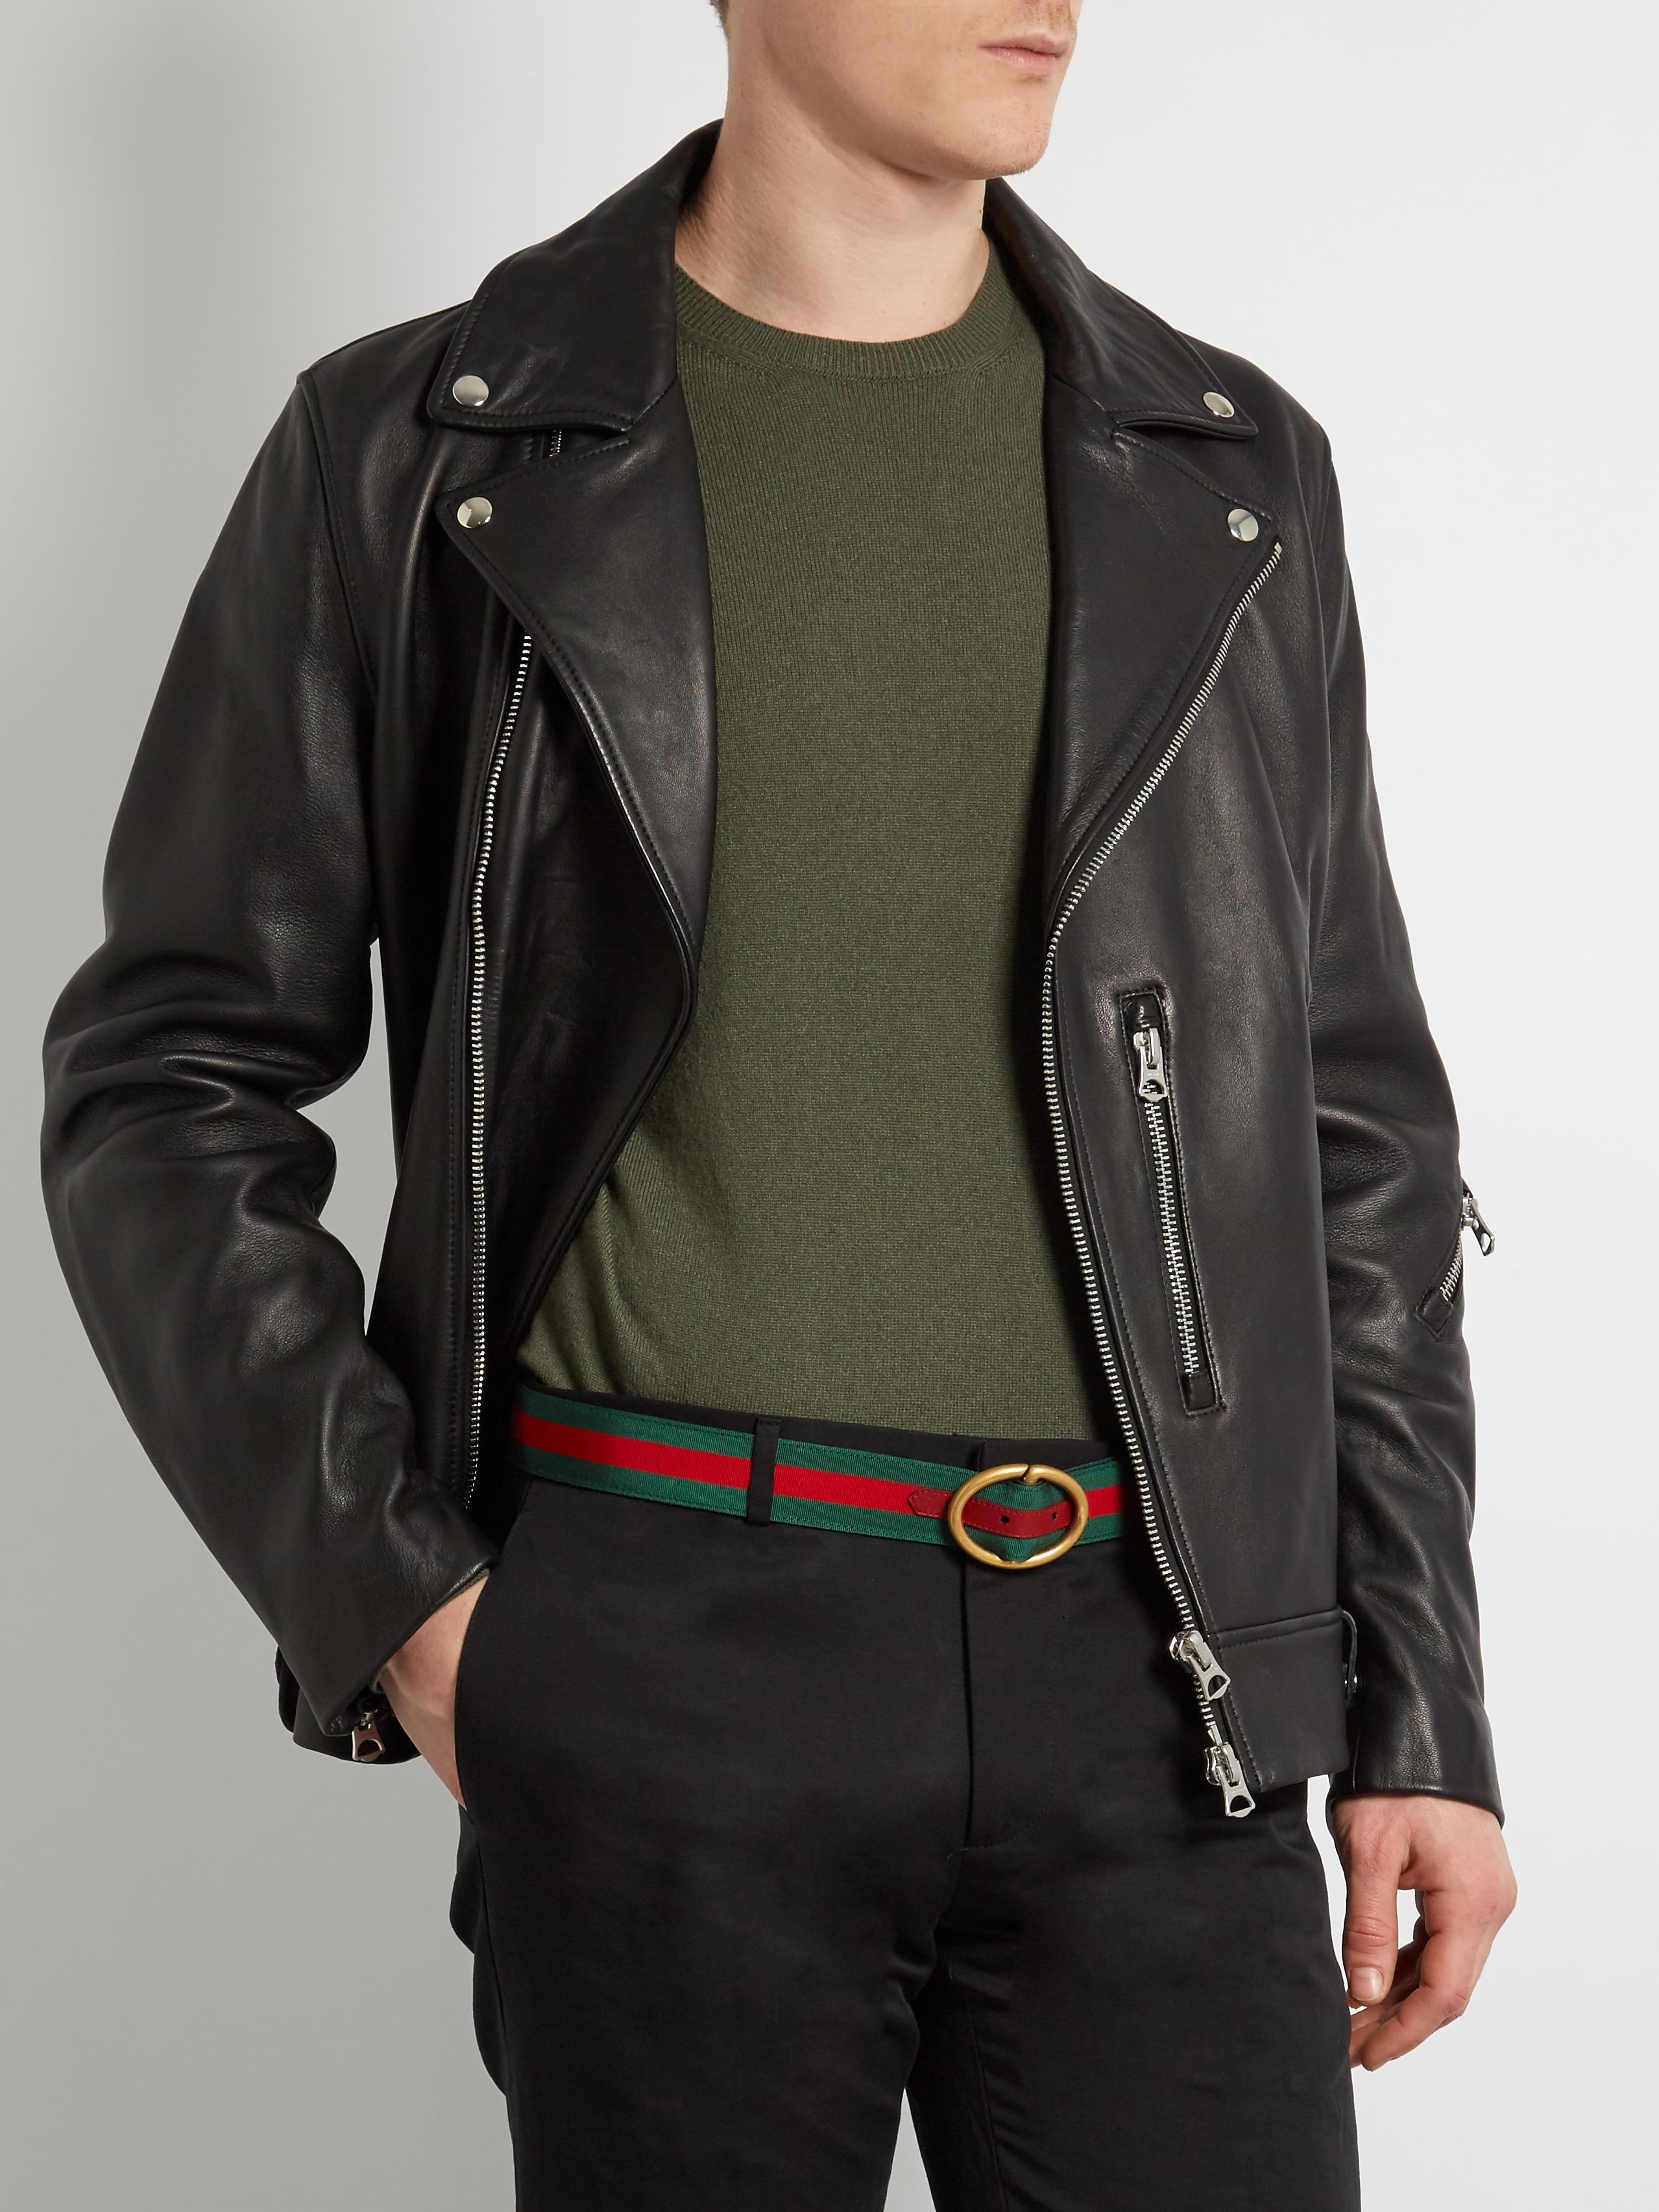 Gucci Leather Oval-buckle Web-grosgrain Belt in Green for Men - Lyst